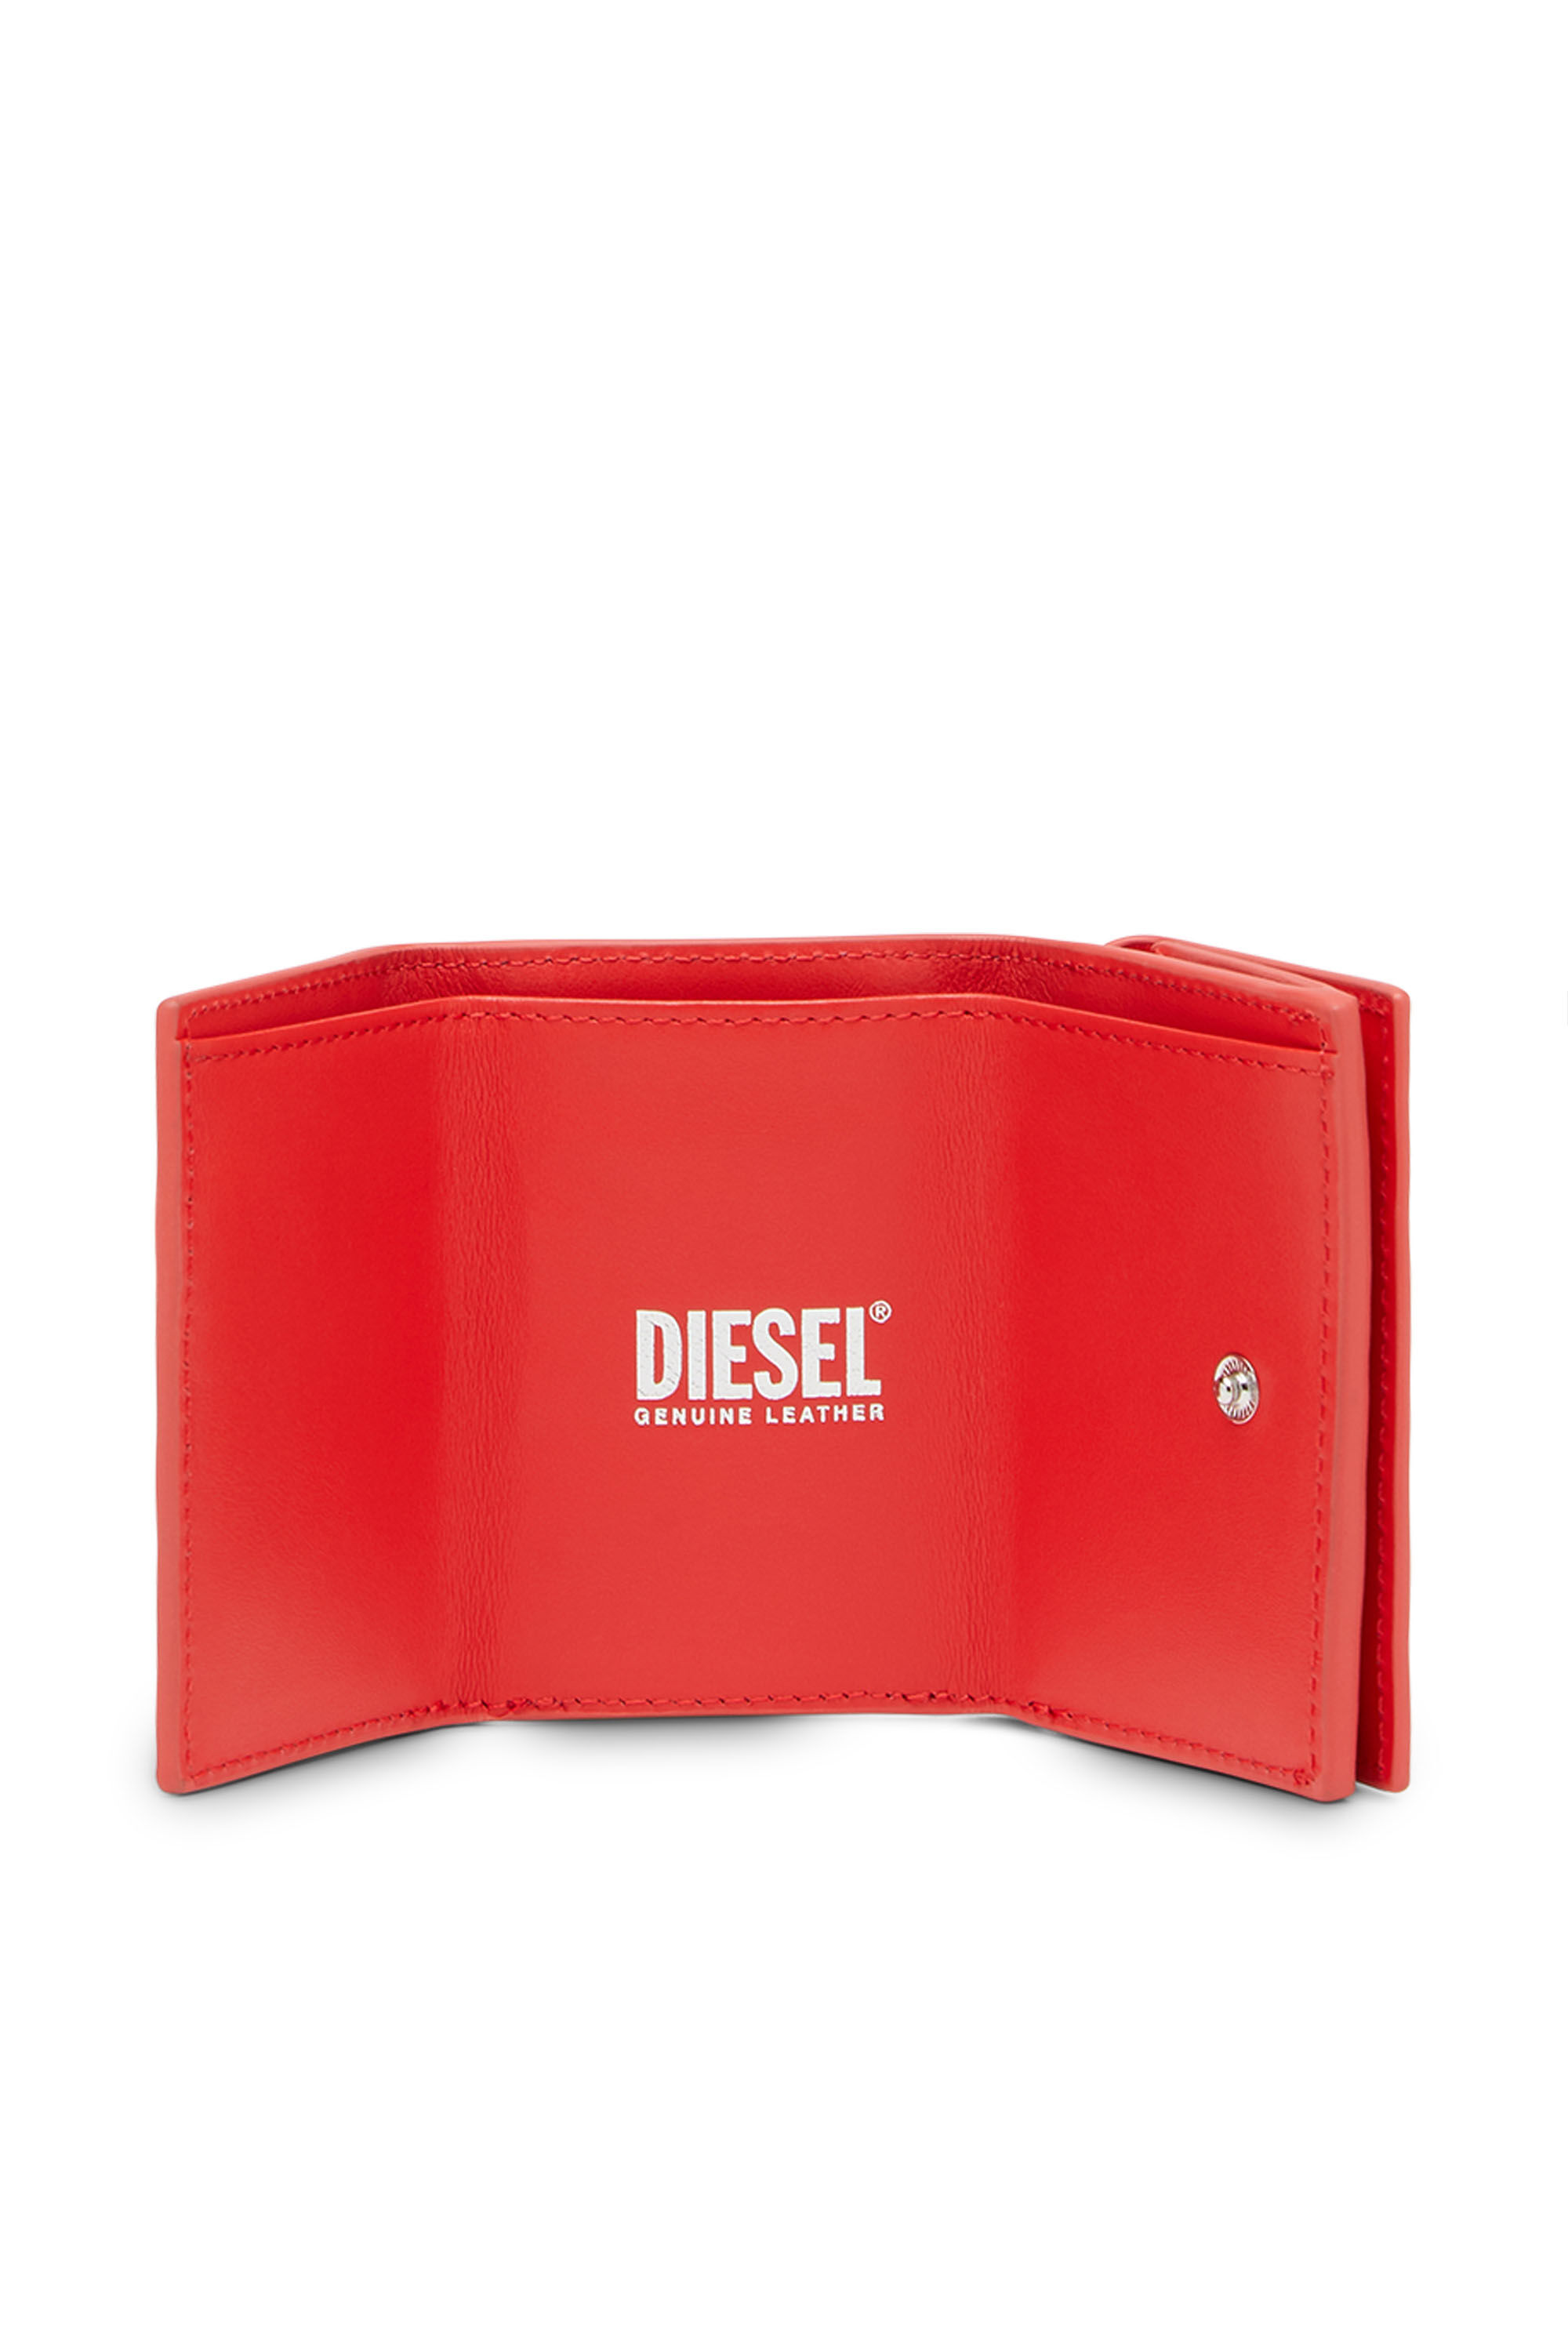 Diesel - LORETTINA, Rosso - Image 3